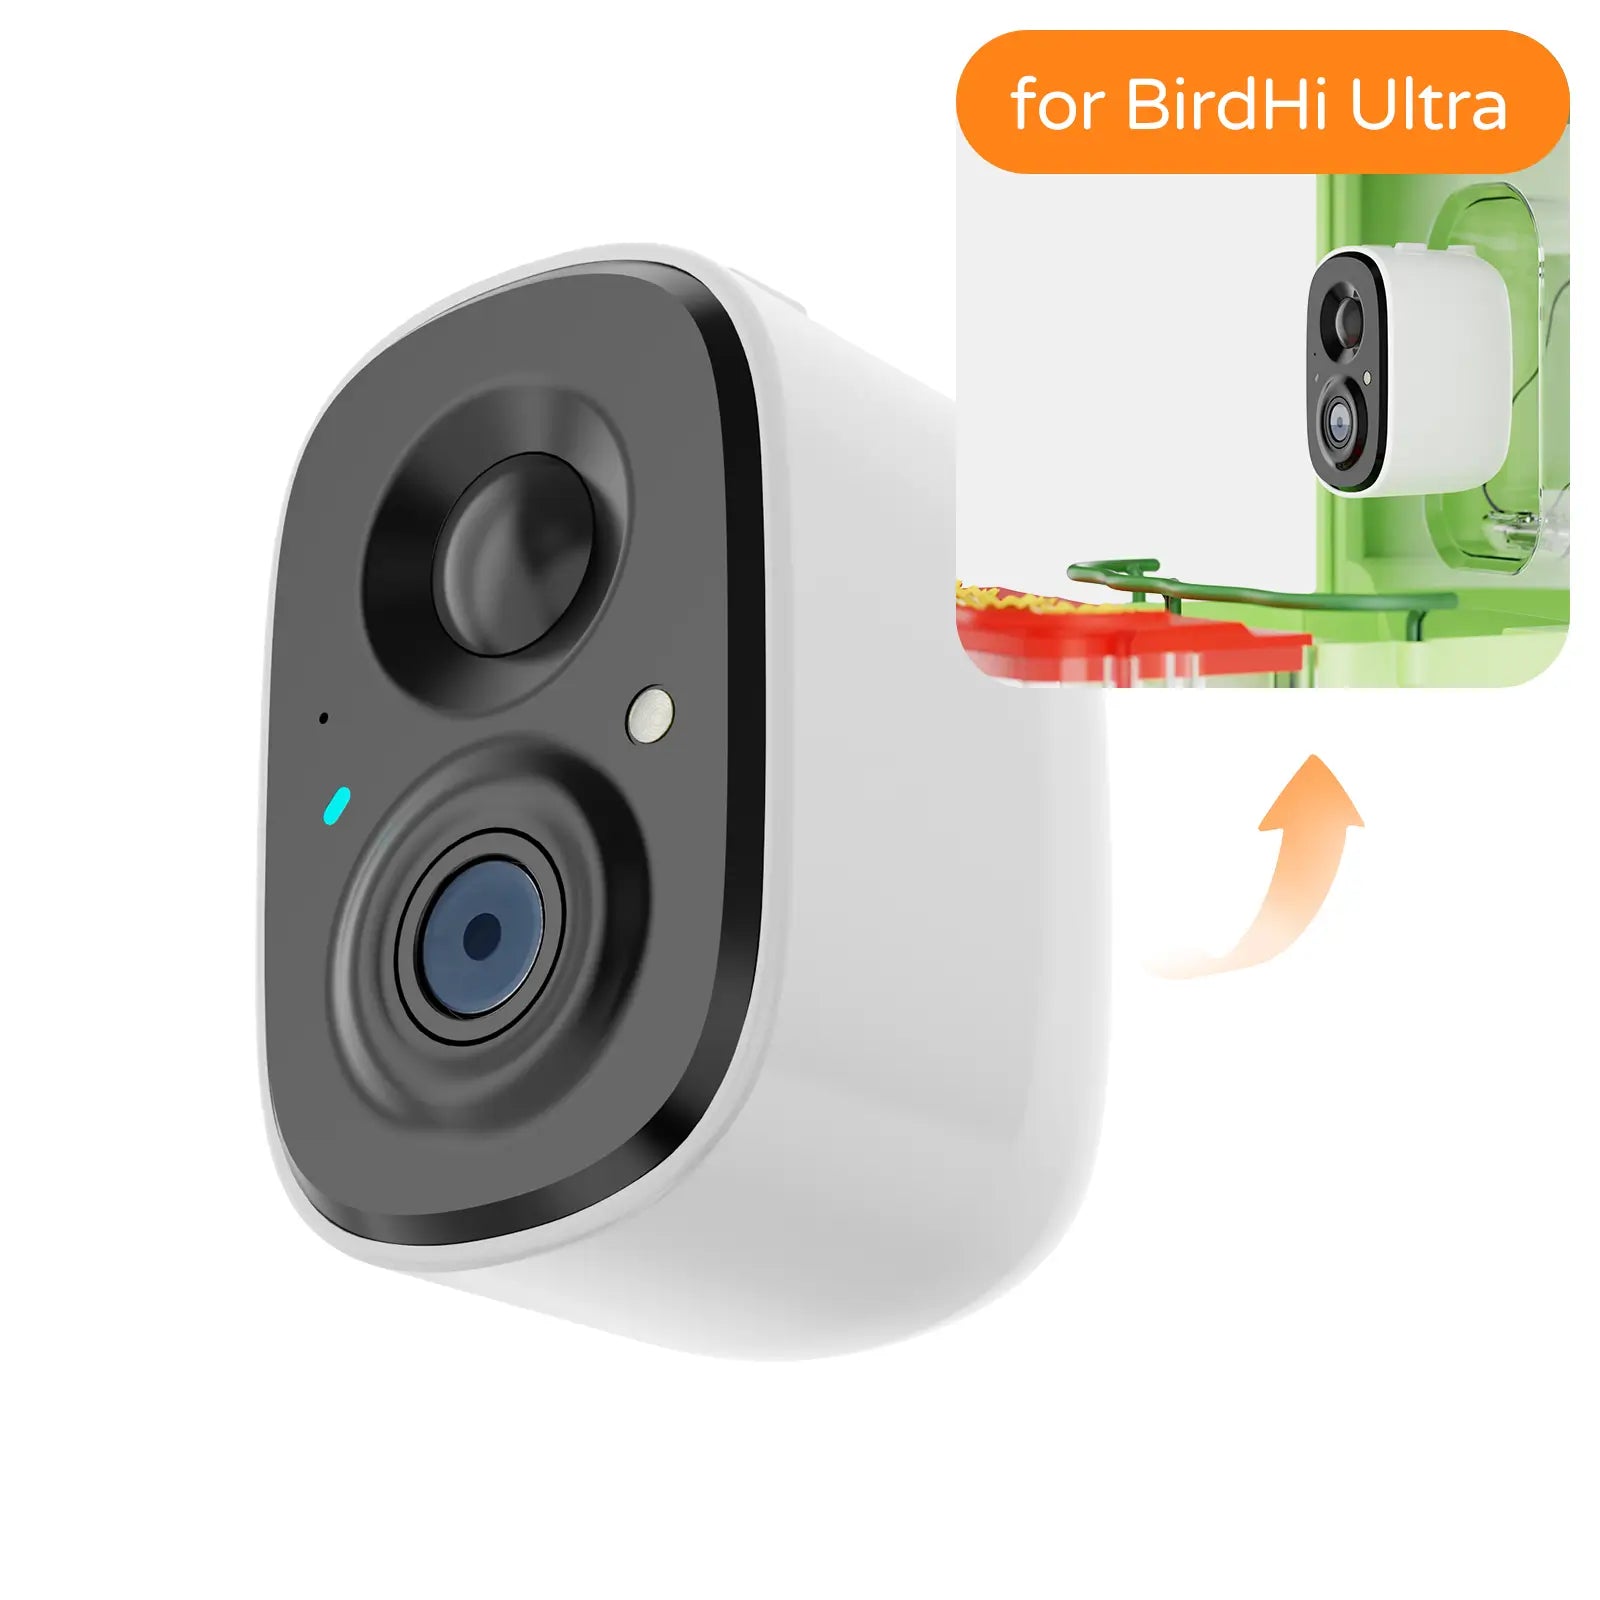 Bilantan bird feeder camera, Smart AI Bird Recognition Camera for BirdHi Ultra